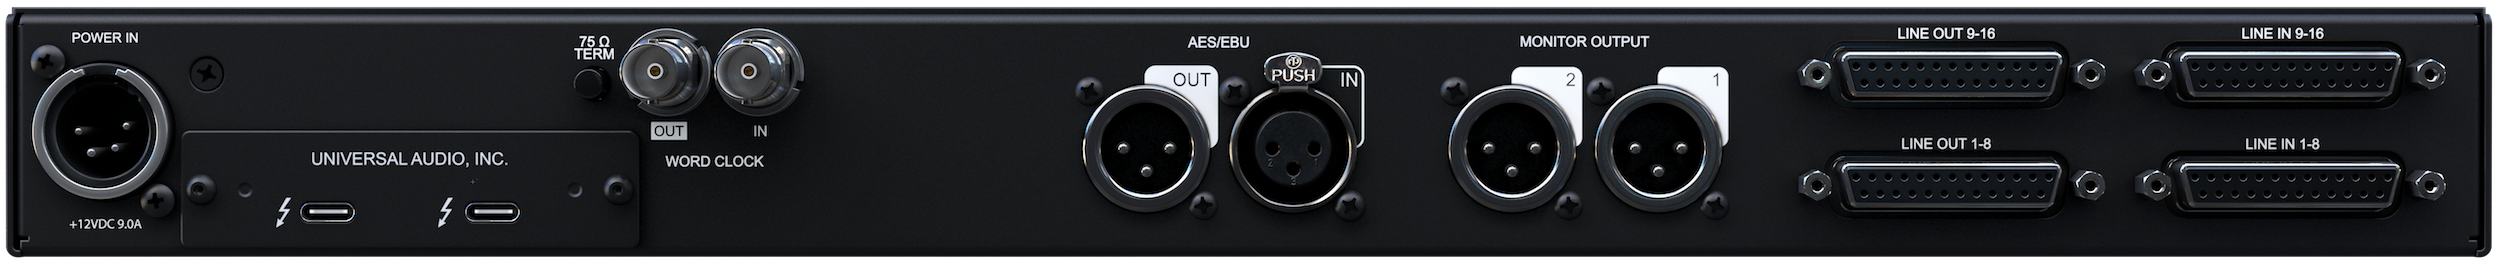 Universal Audio Apollo X16 - Interface de audio thunderbolt - Variation 2